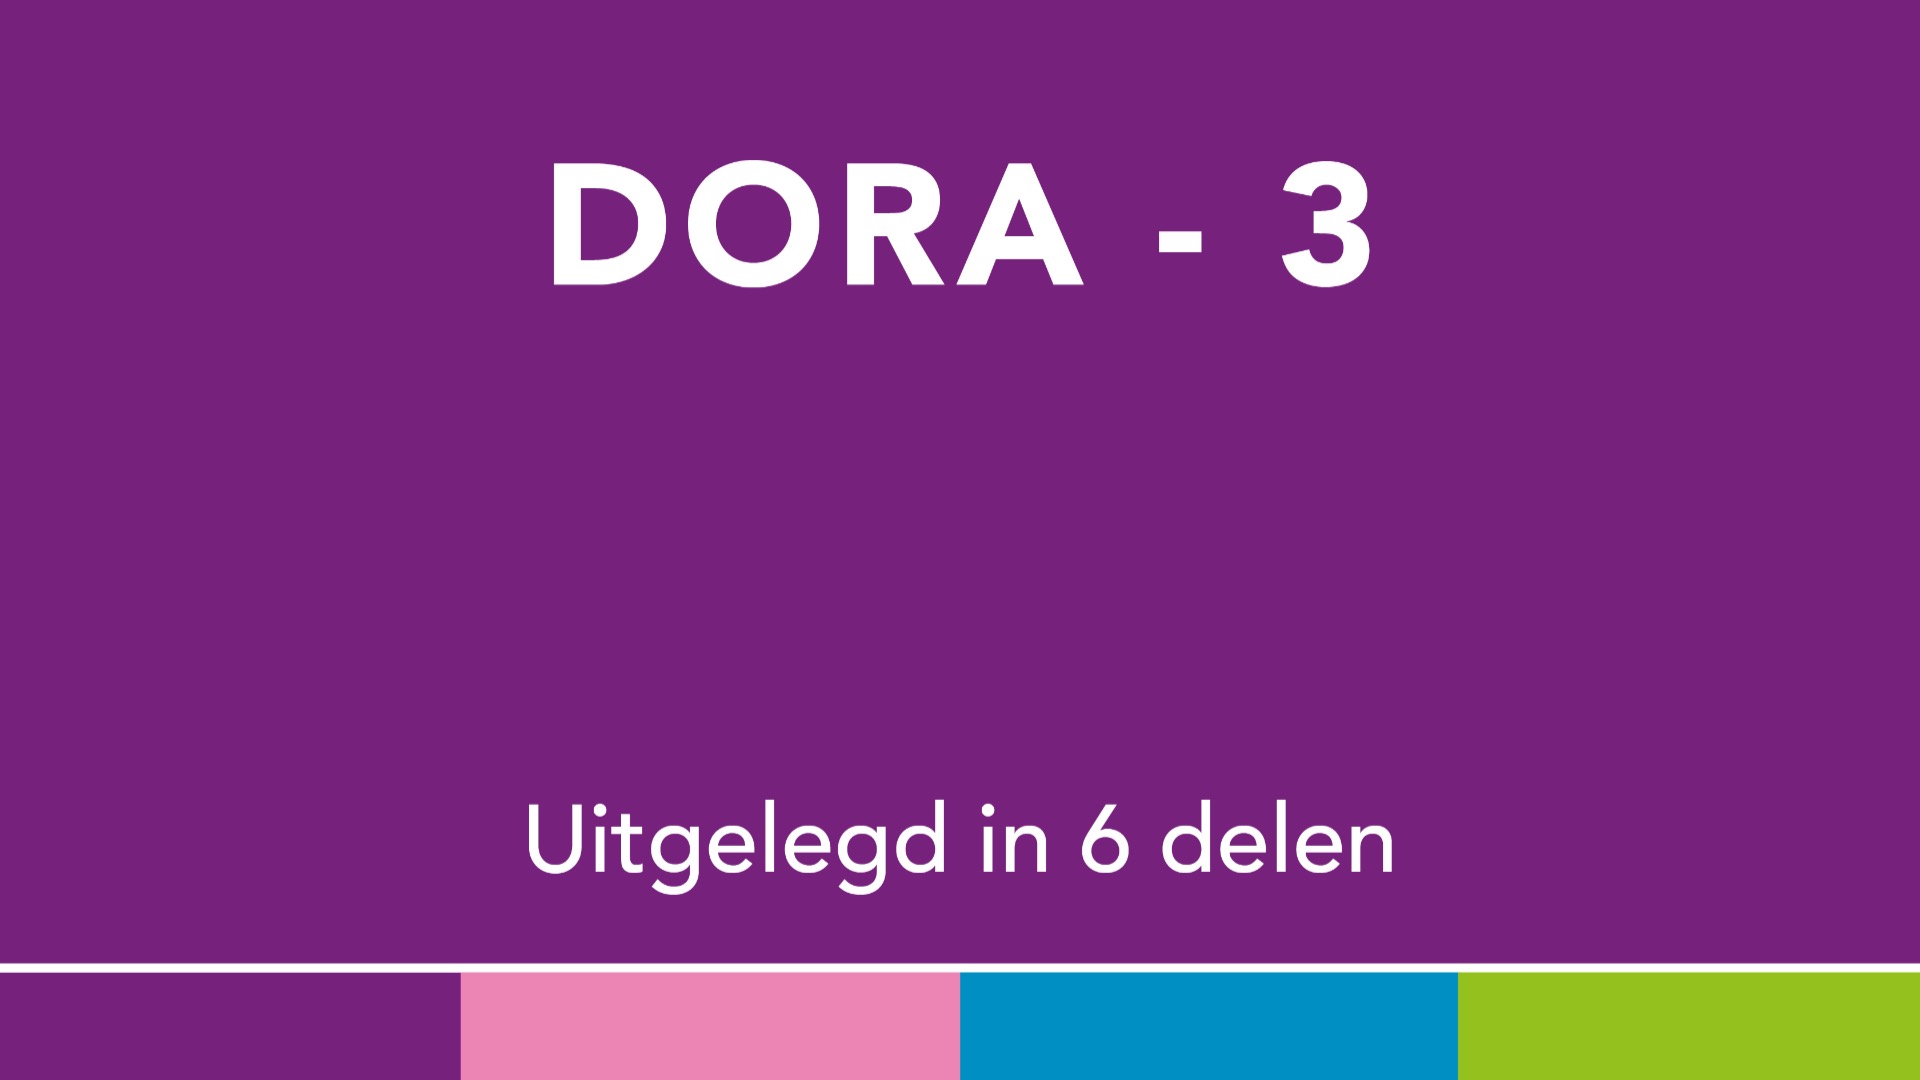 DORA - 3